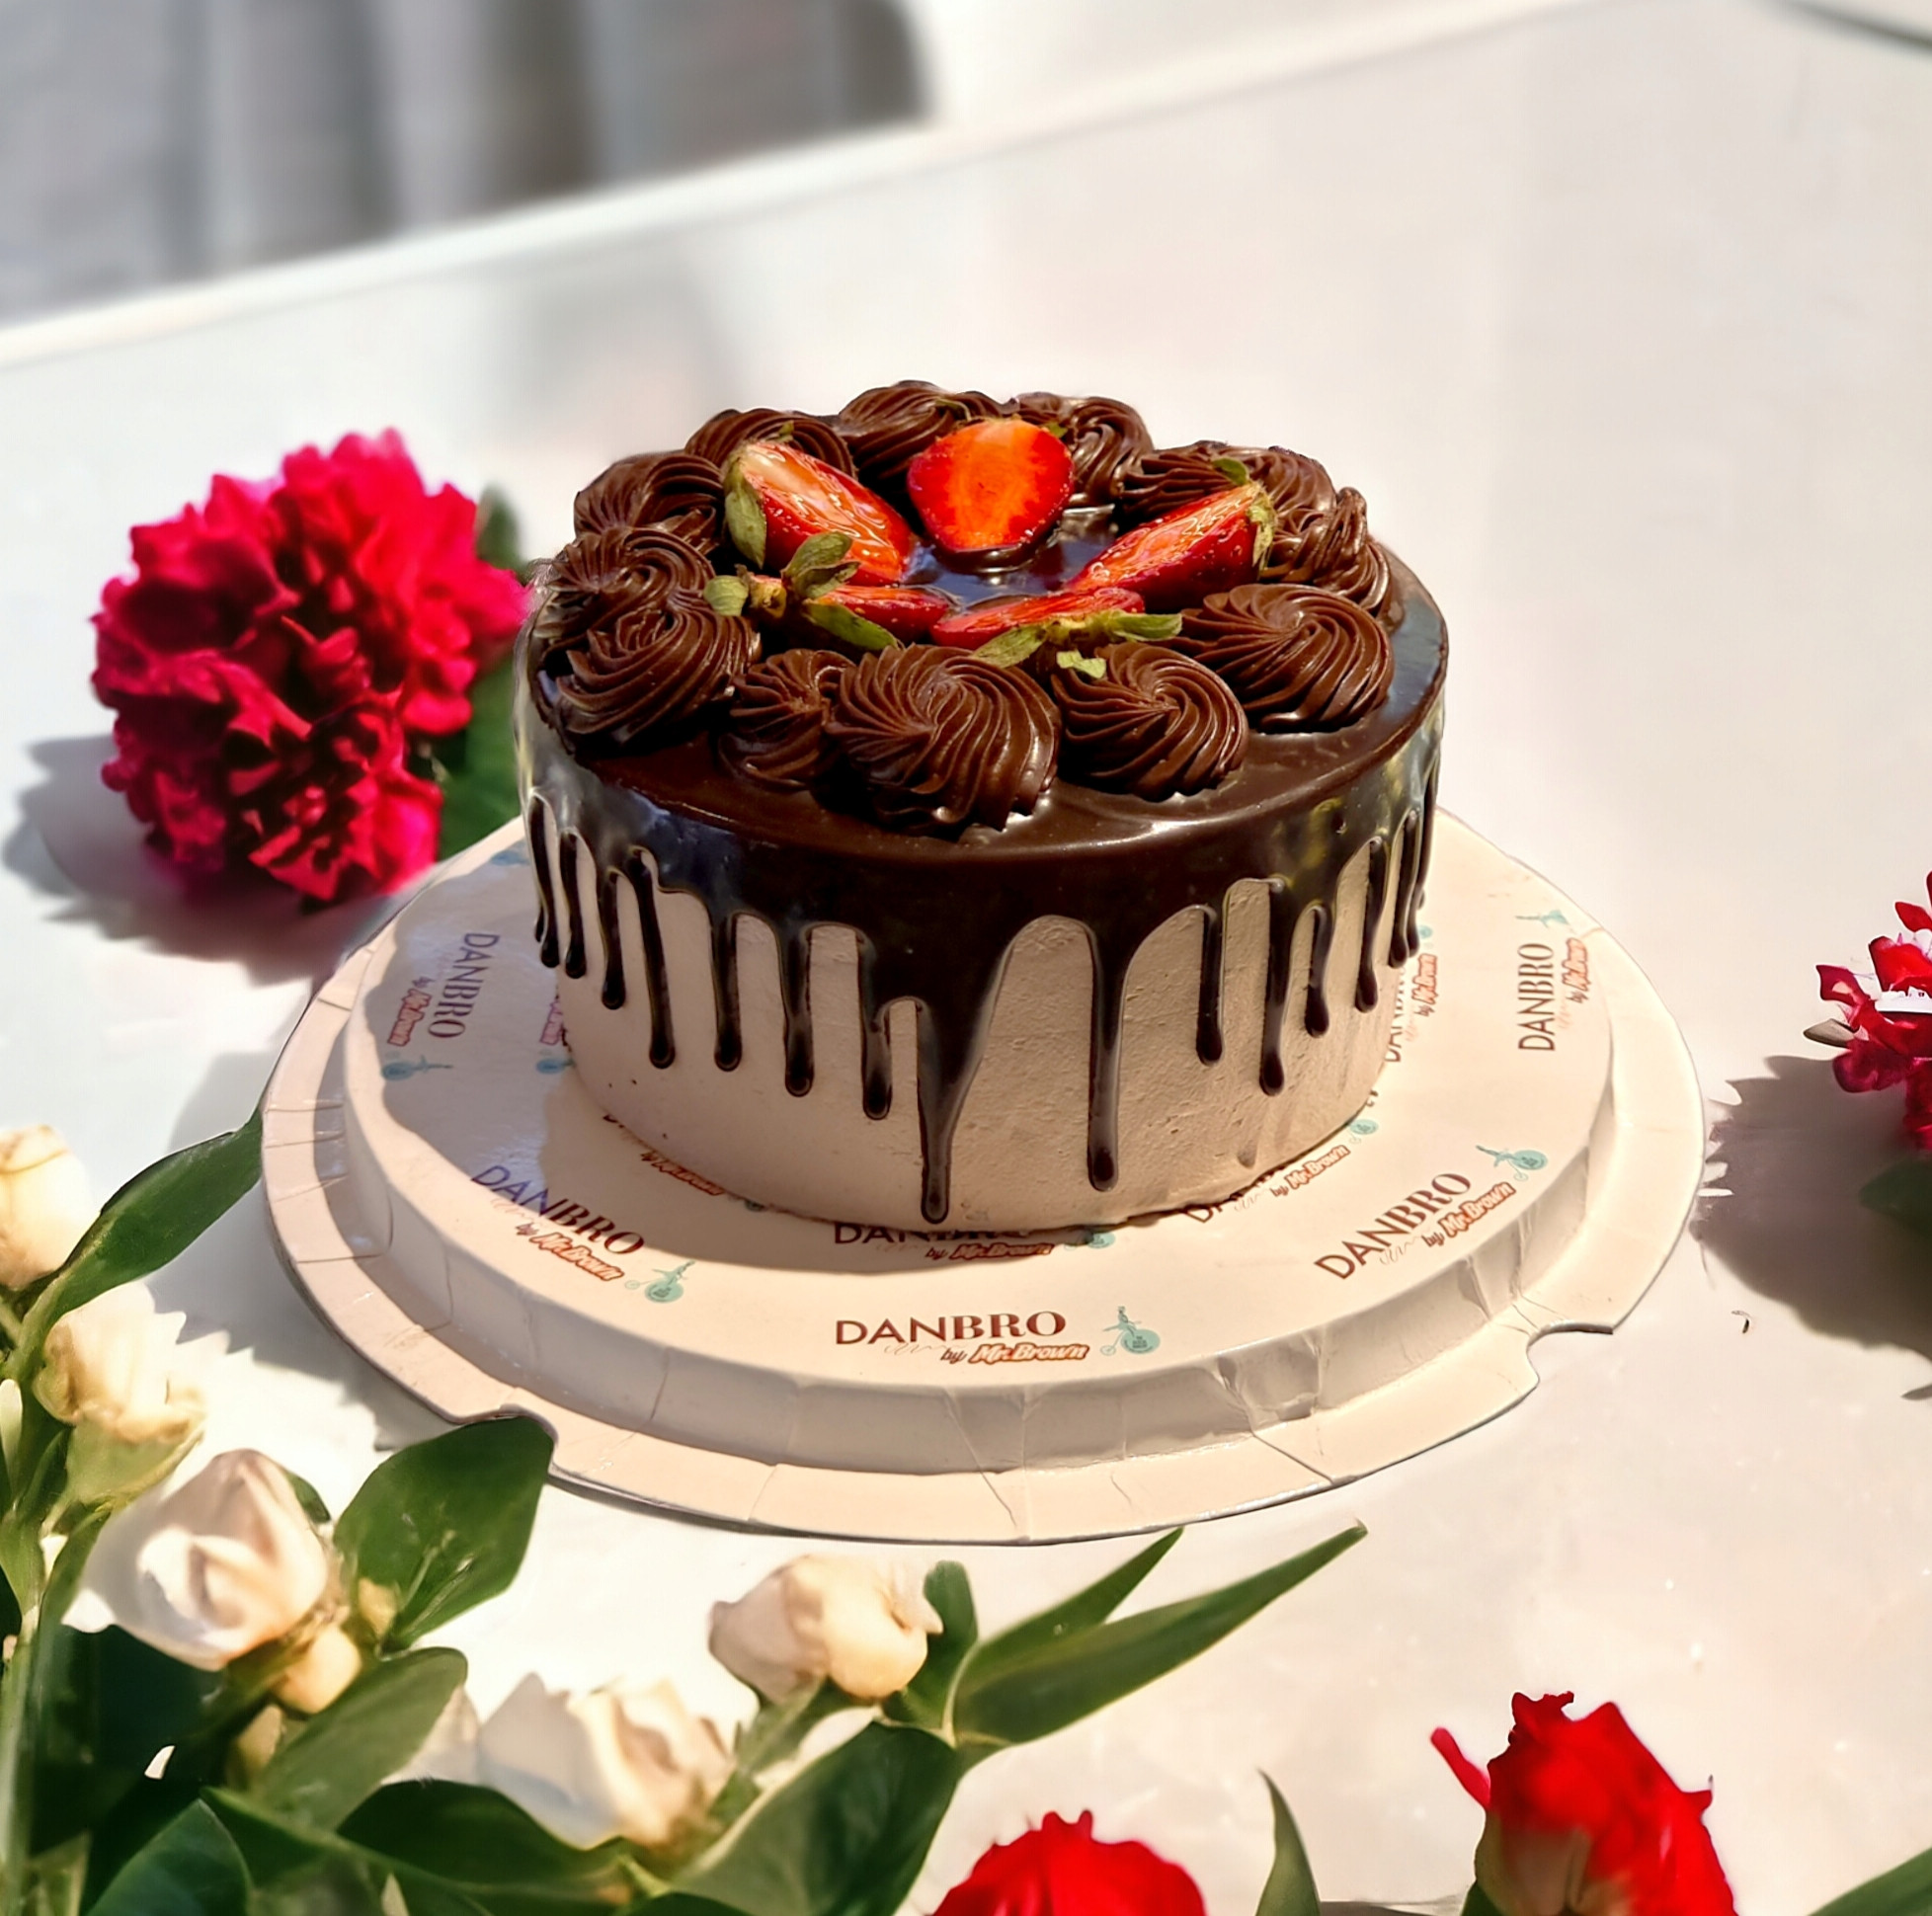 Best Premium Cakes delivery | Order Premium Cakes Online - Just Bake